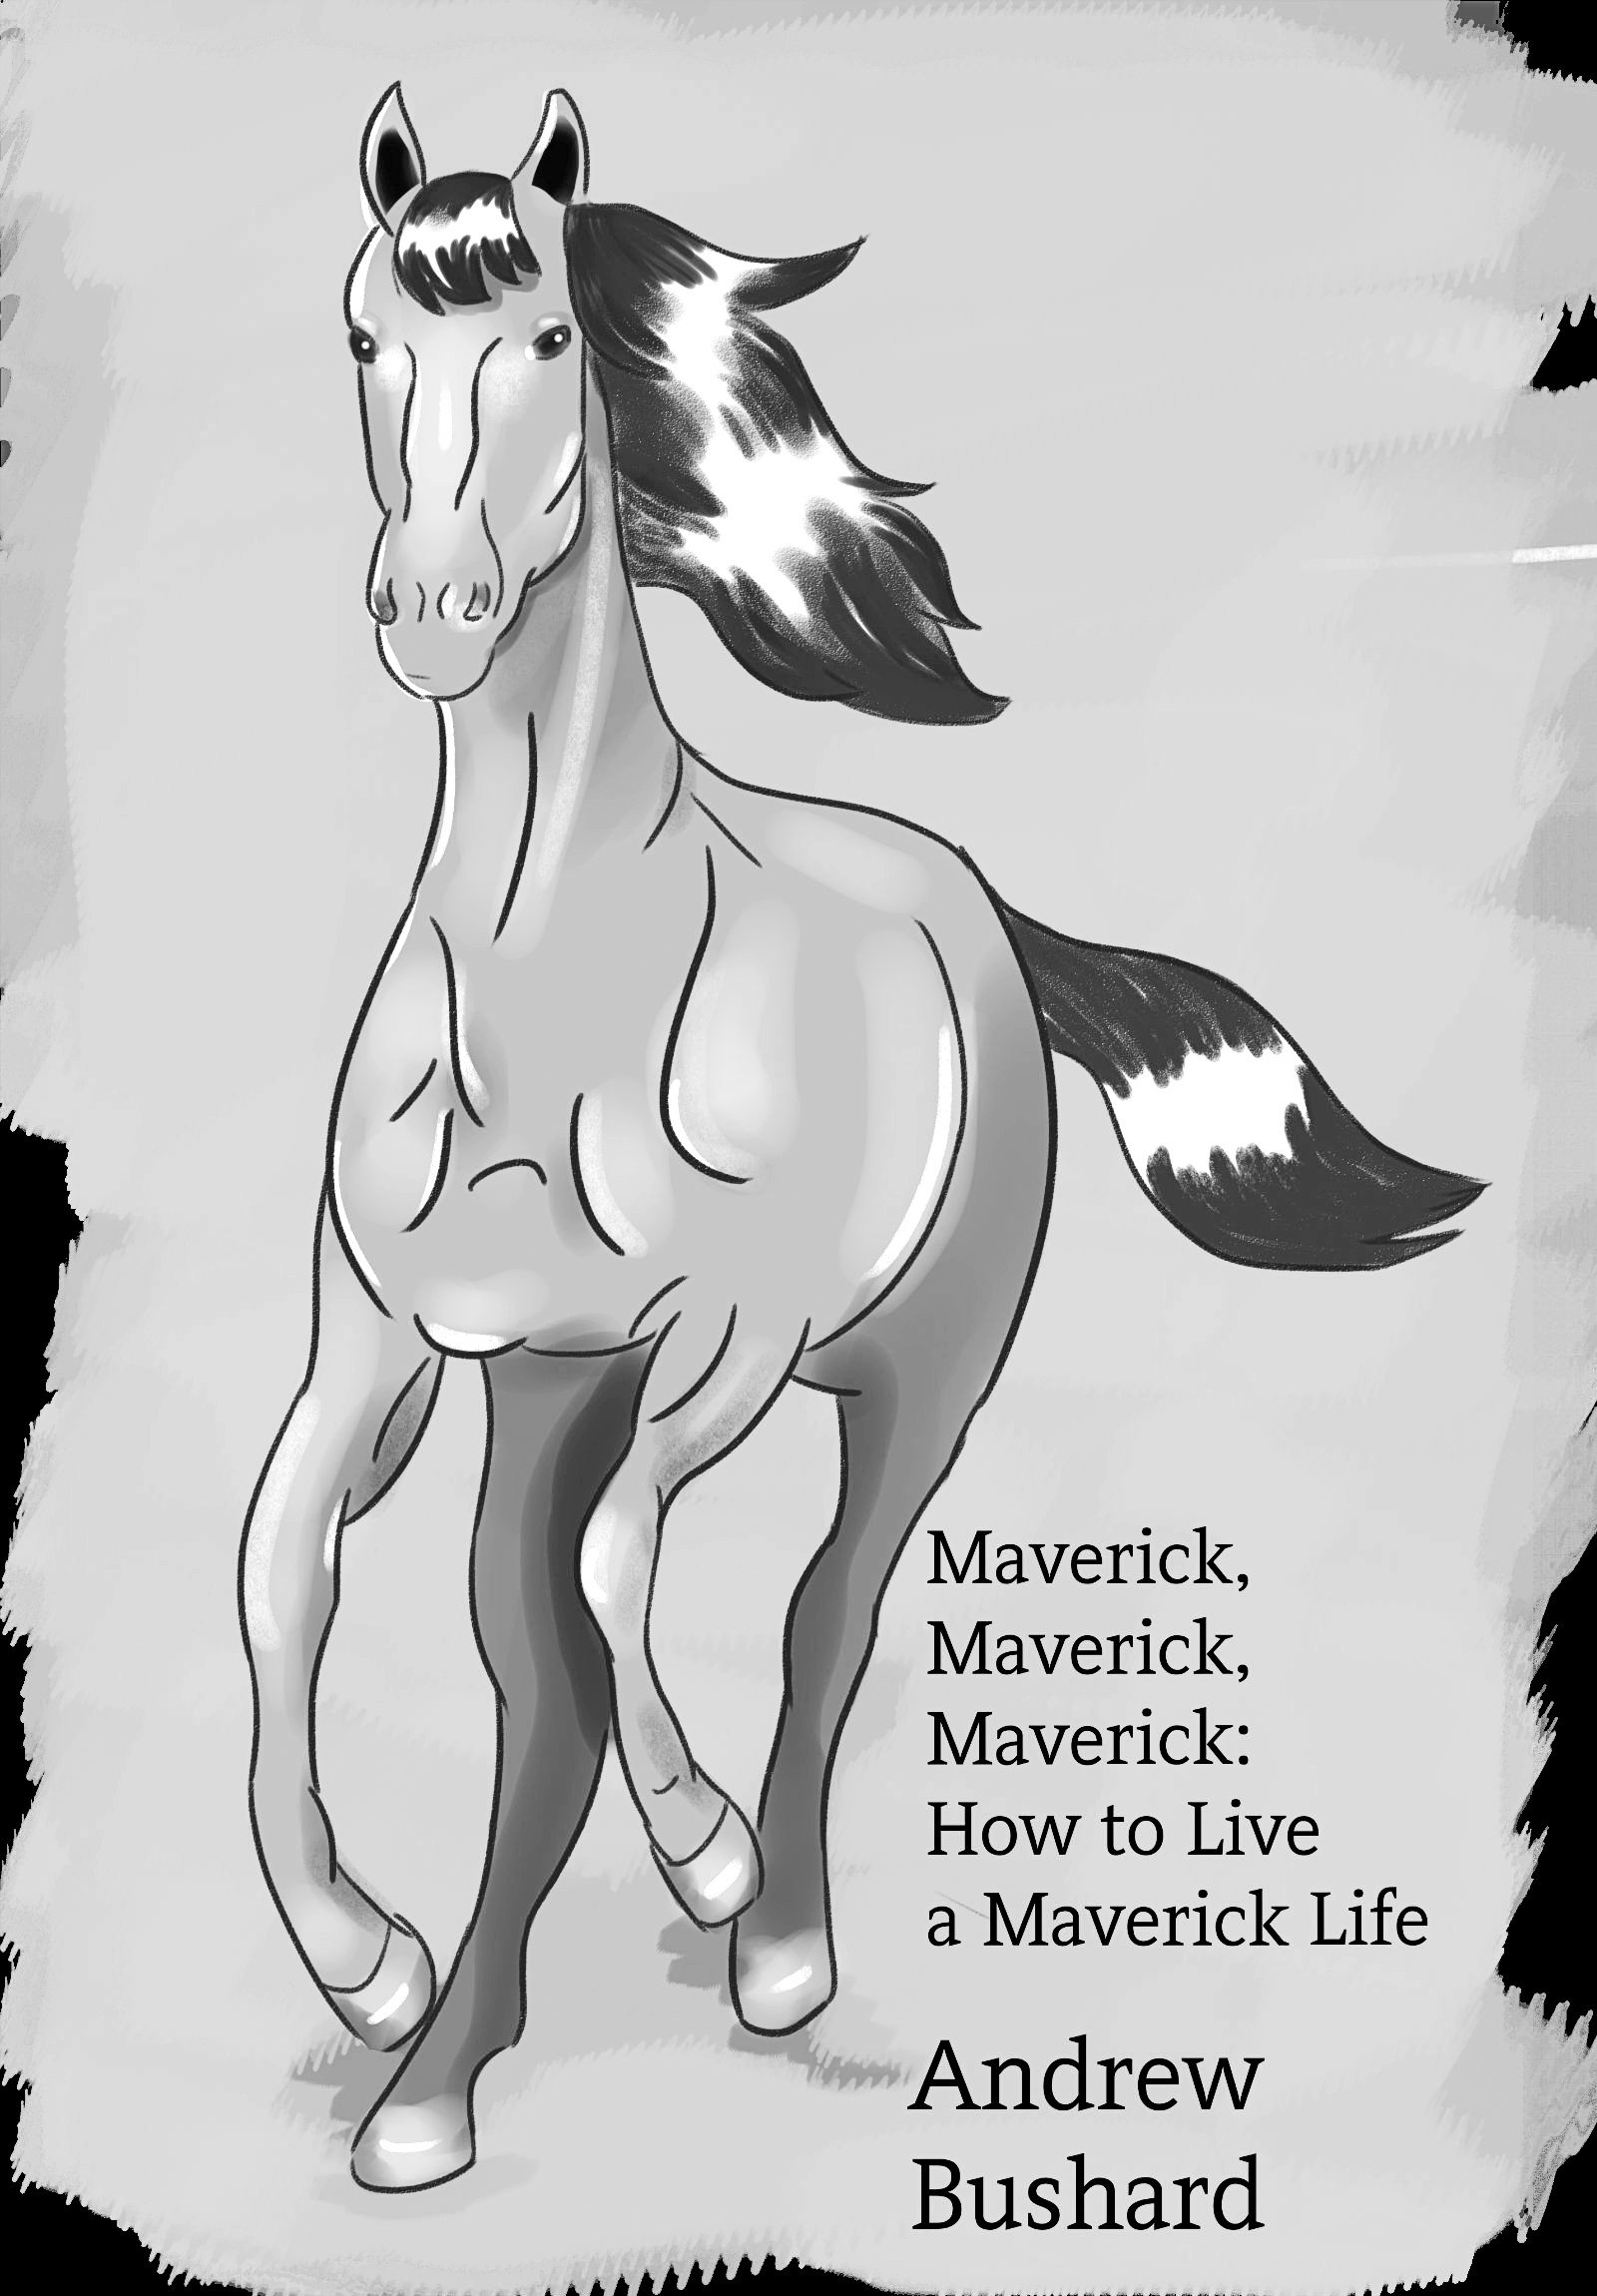 Maverick, Maverick, Maverick: How to Live a Maverick Life